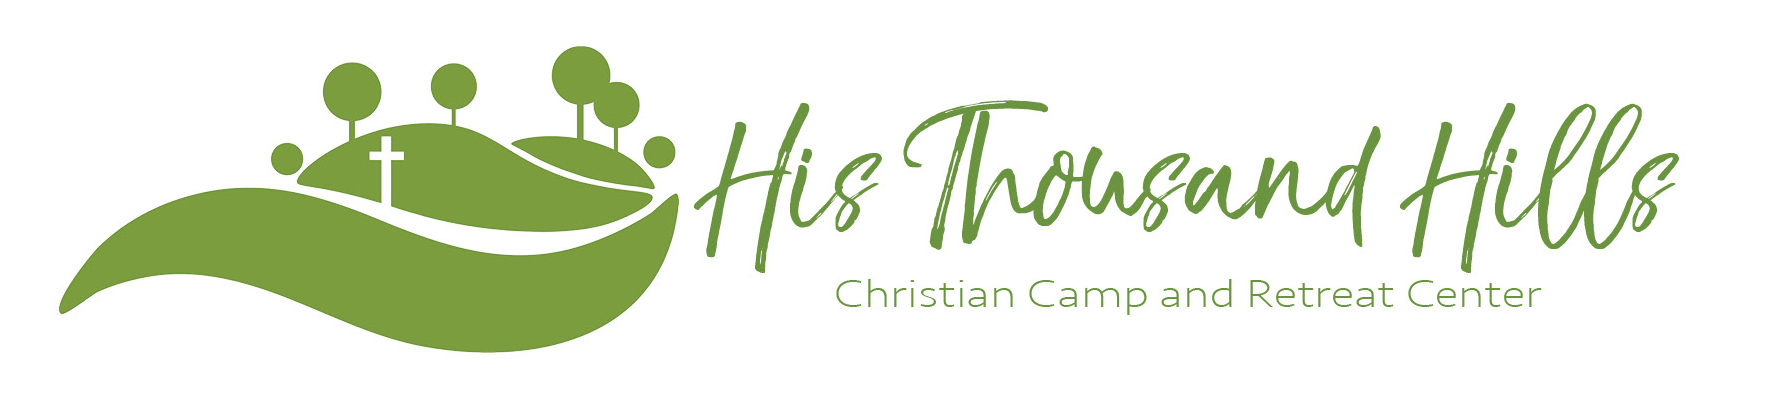 His Thousand Hills logo